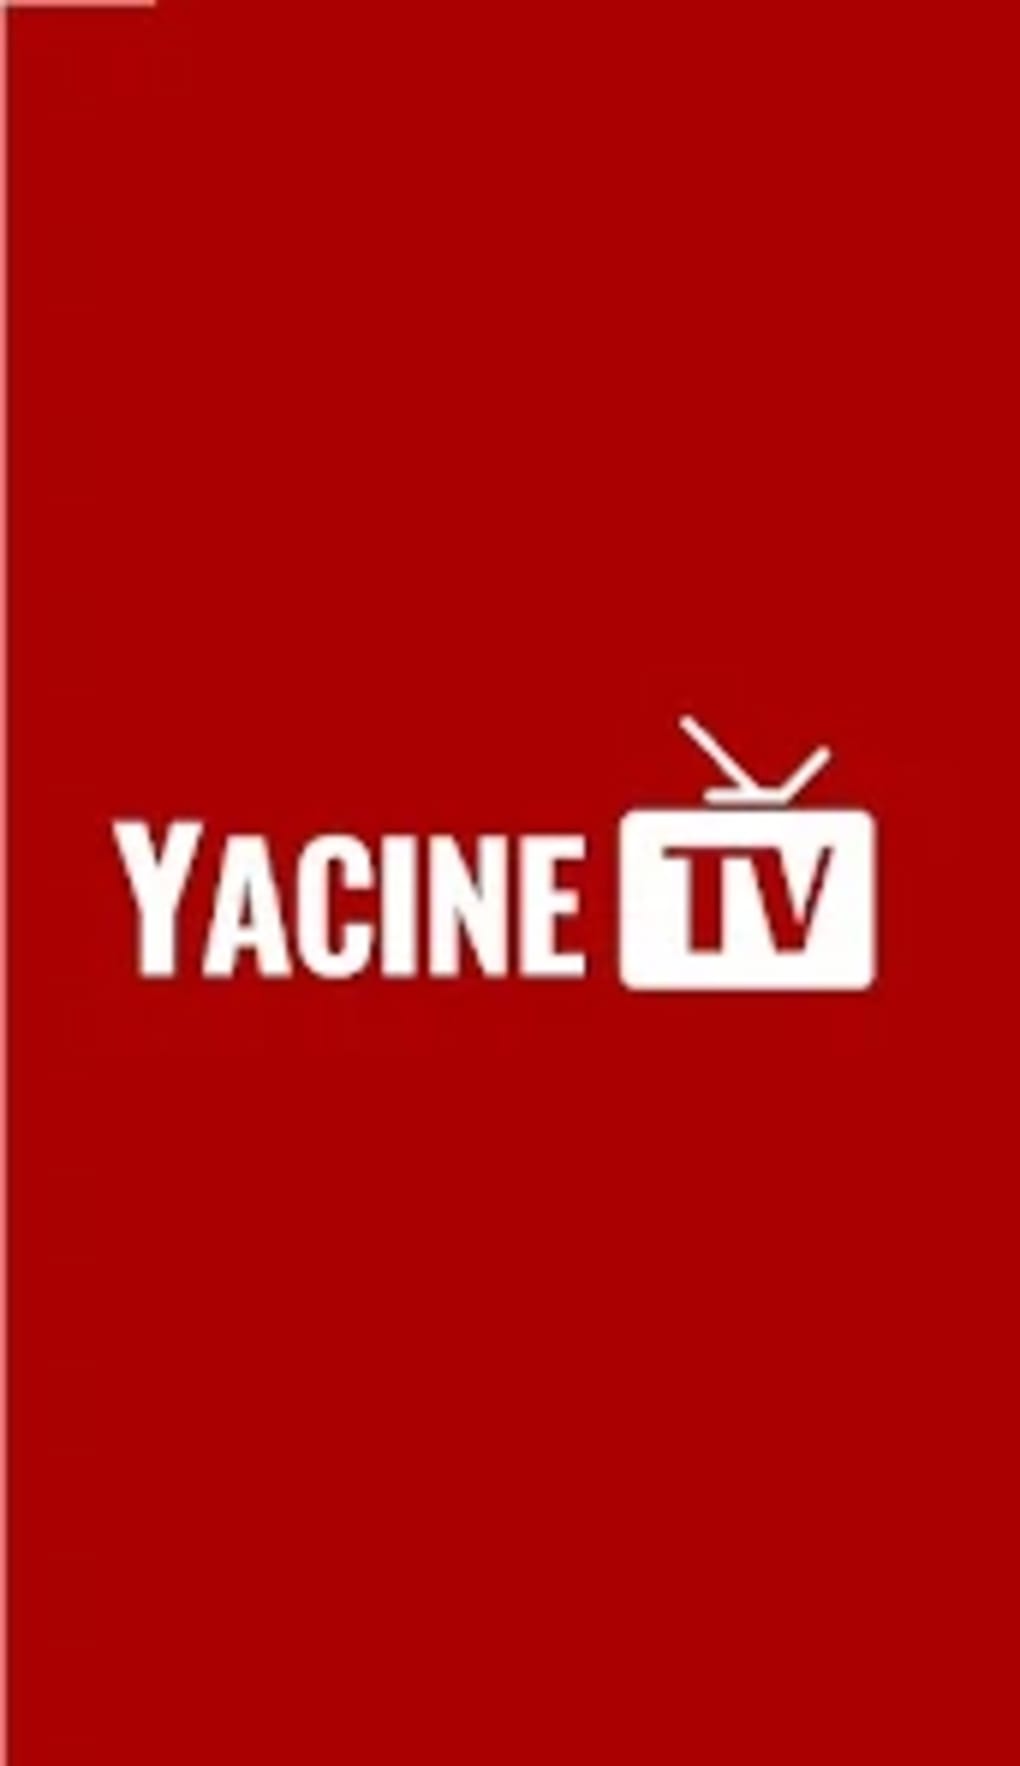 yacine tv live football